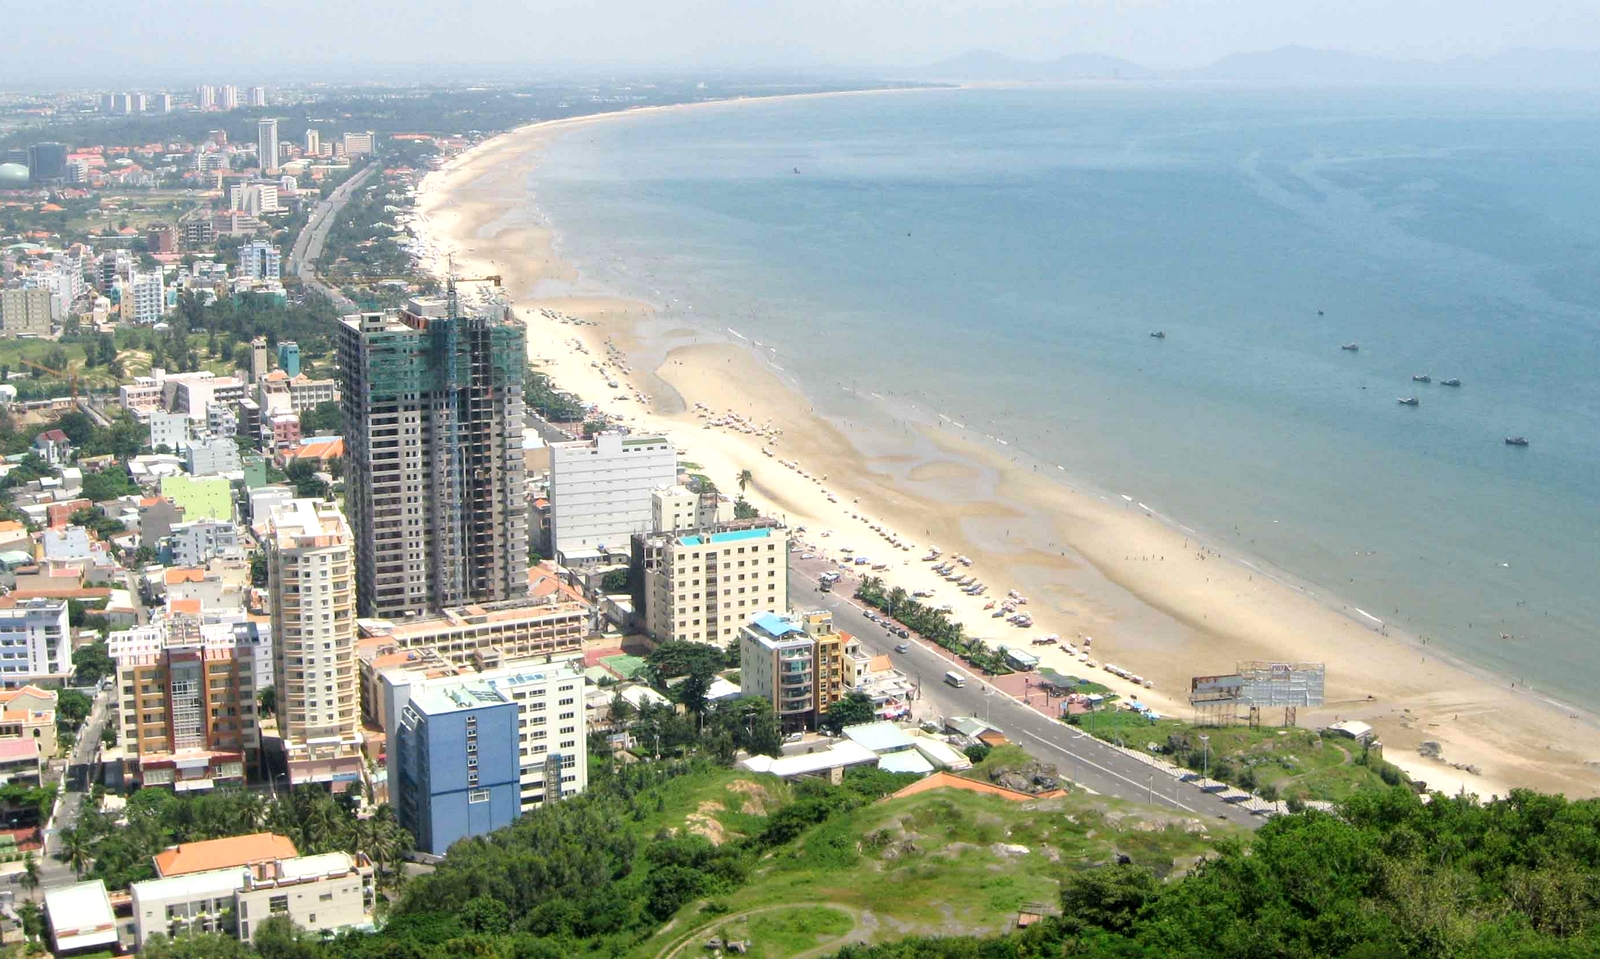 Bà Rịa-Vũng Tàu promotes investment in four areas - Vietnam Construction